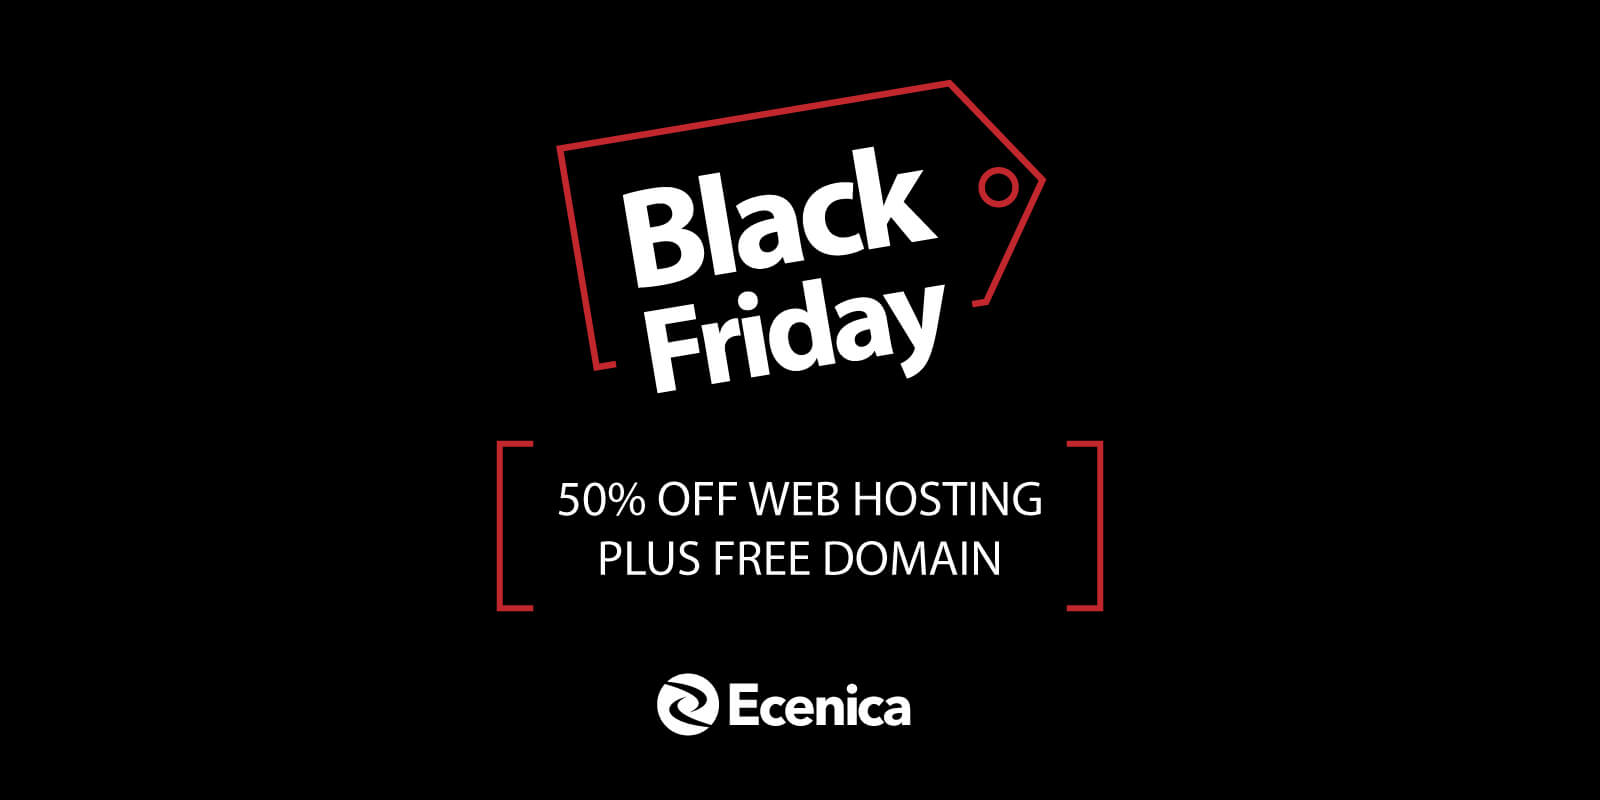 Black Friday 50 Off Web Hosting Sale 2016 Ecenica